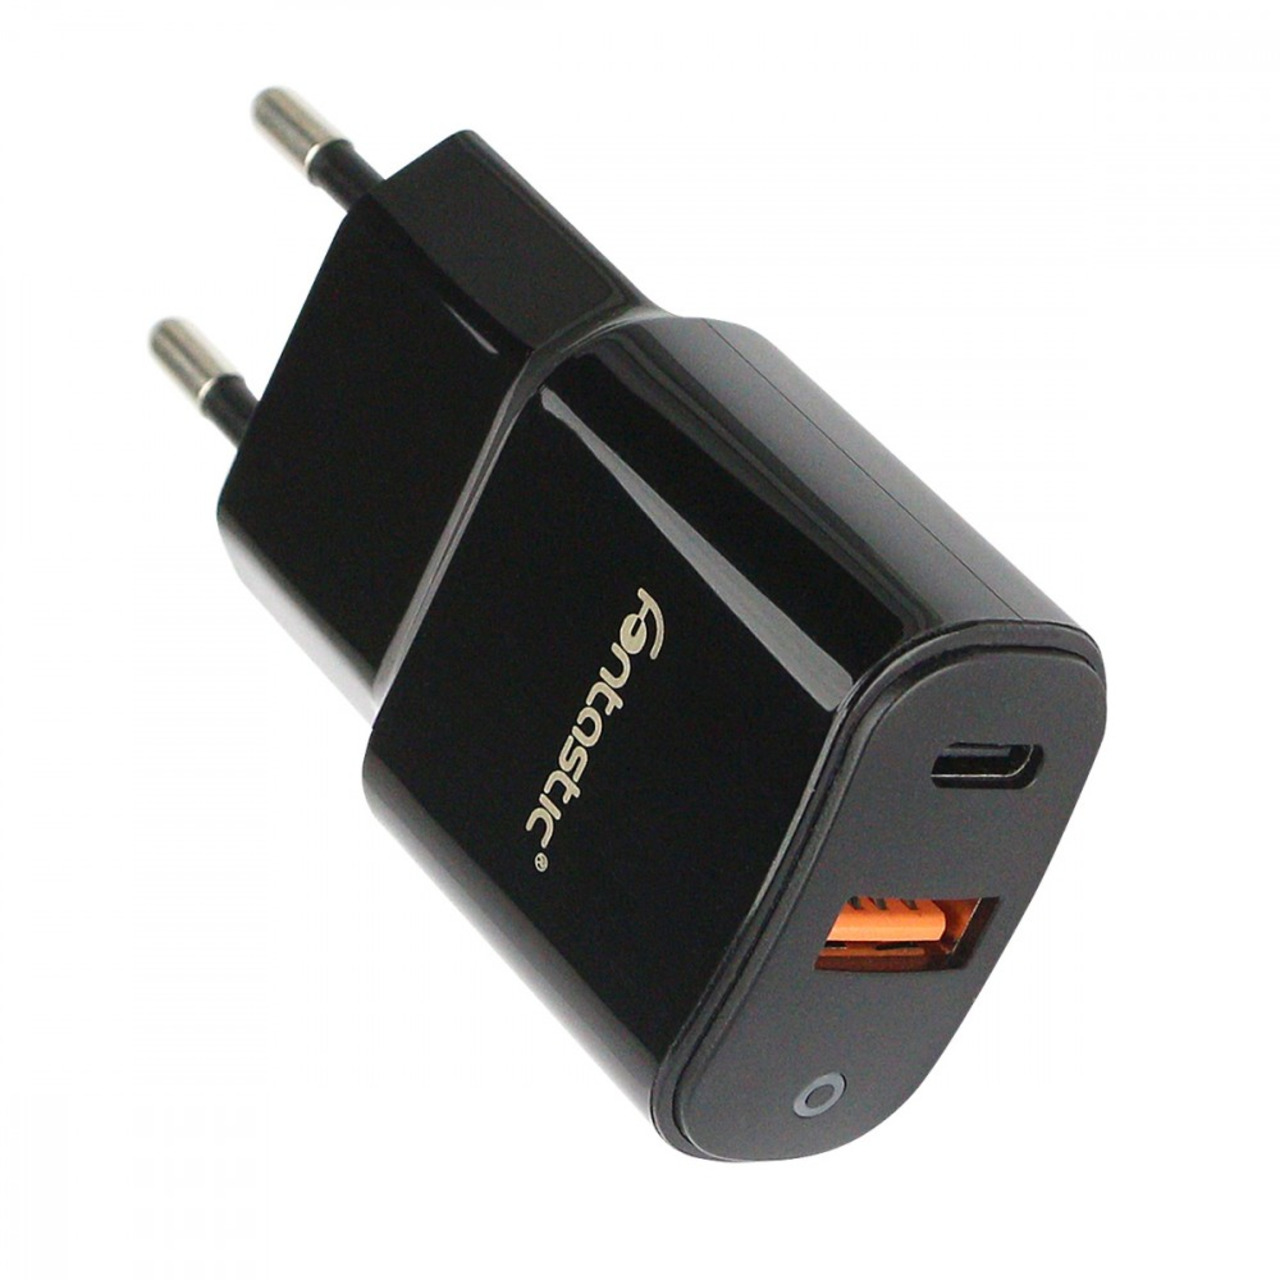 Fontastic USB-Type-C PD + USB-A Ladegert Fort- 18 W- Power Delivery- 100 - 240 V- Schwarz unter Stromversorgung